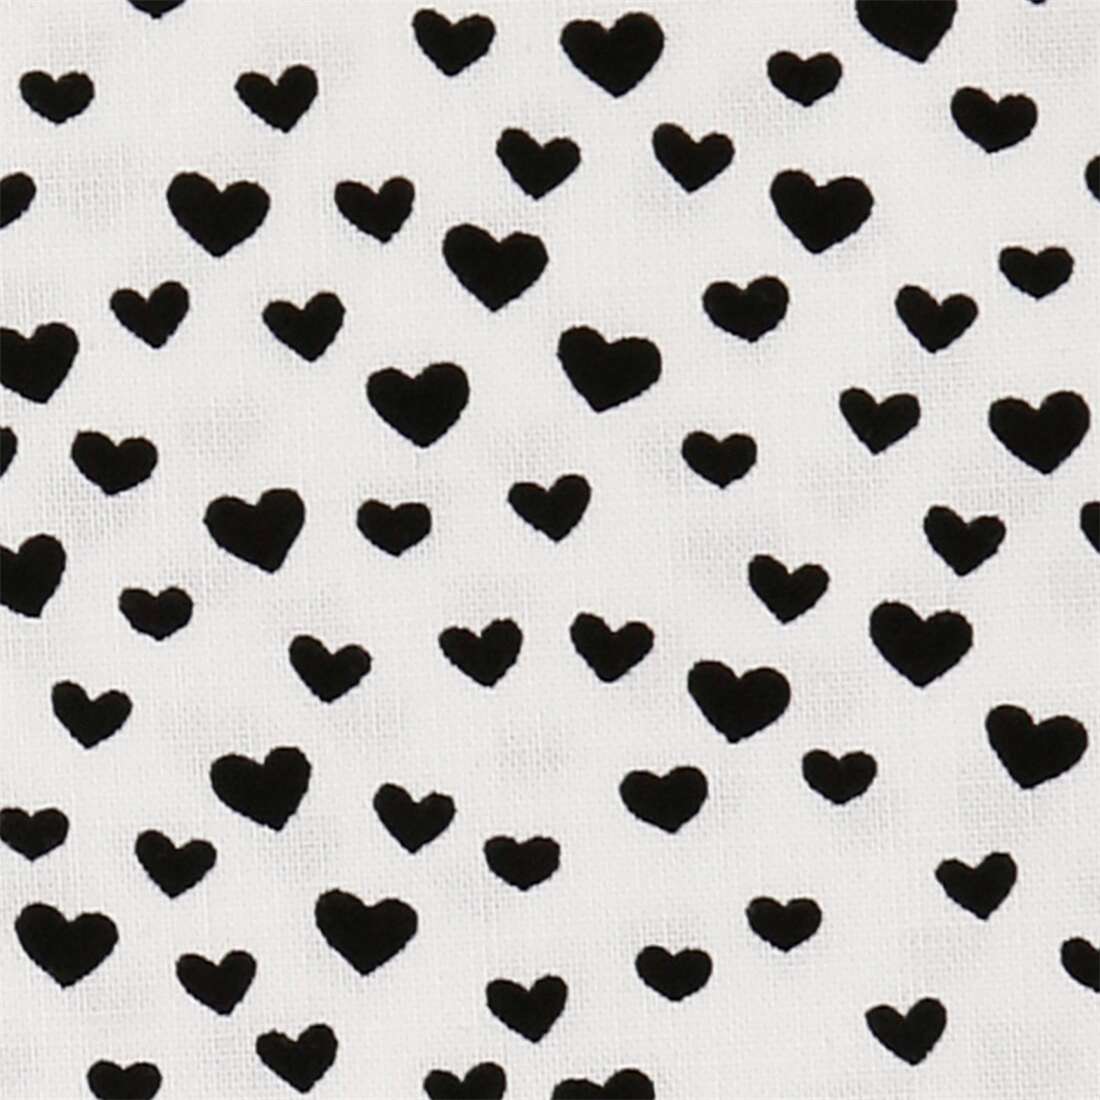 Timeless Treasures fabric white packed mini black hearts - modeS4u